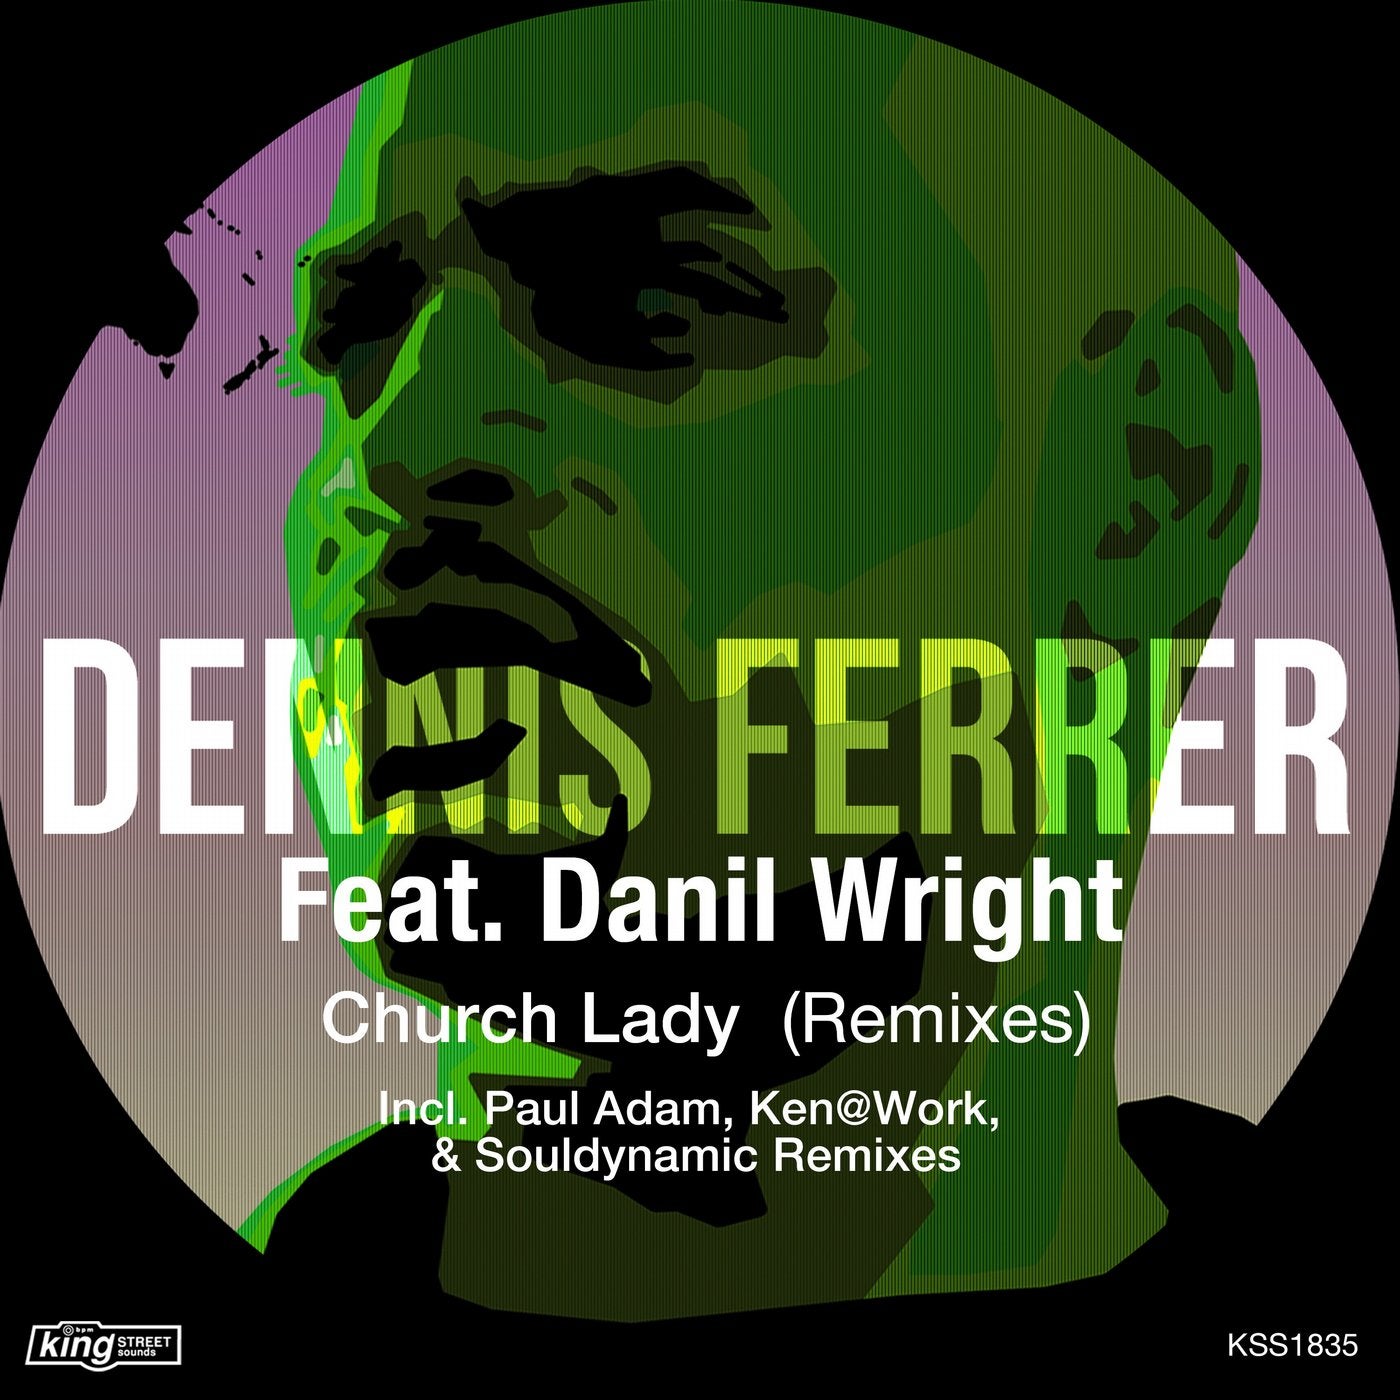 Church Lady (Remixes)